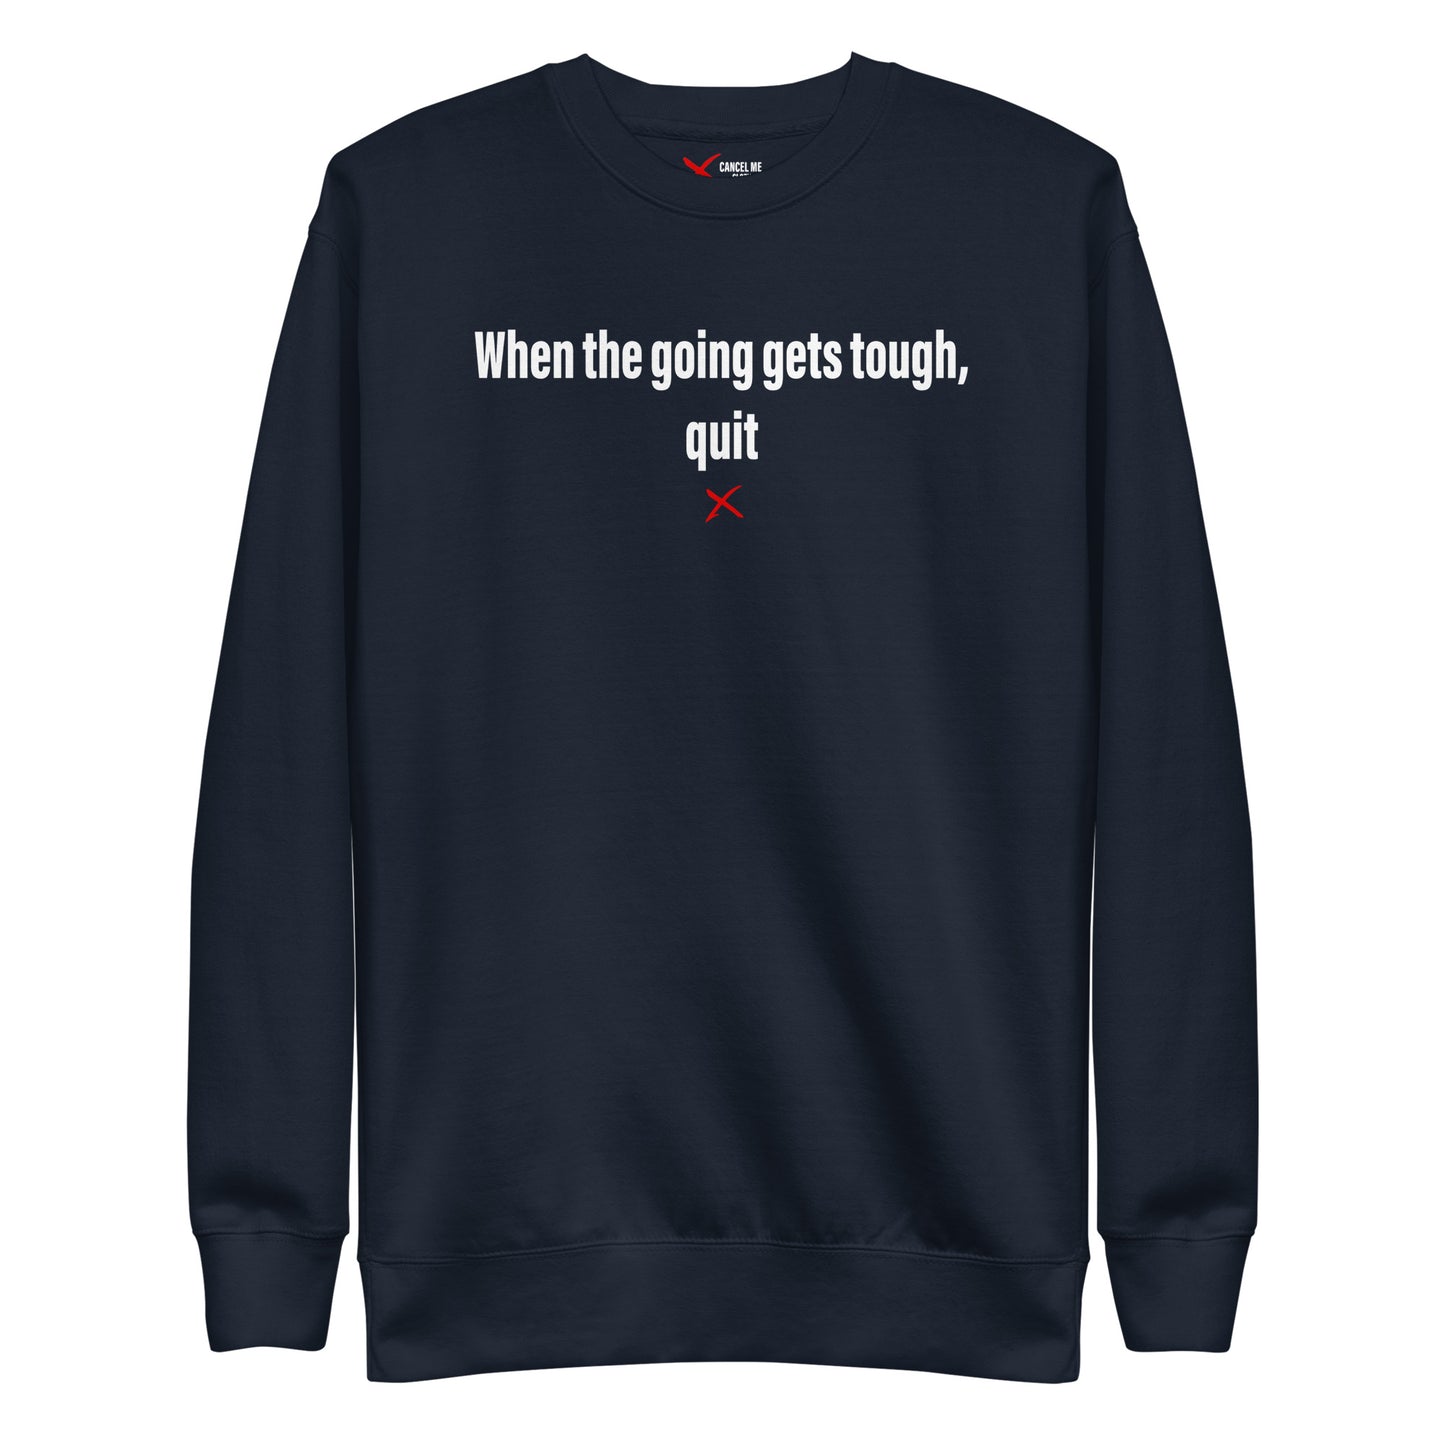 When the going gets tough, quit - Sweatshirt